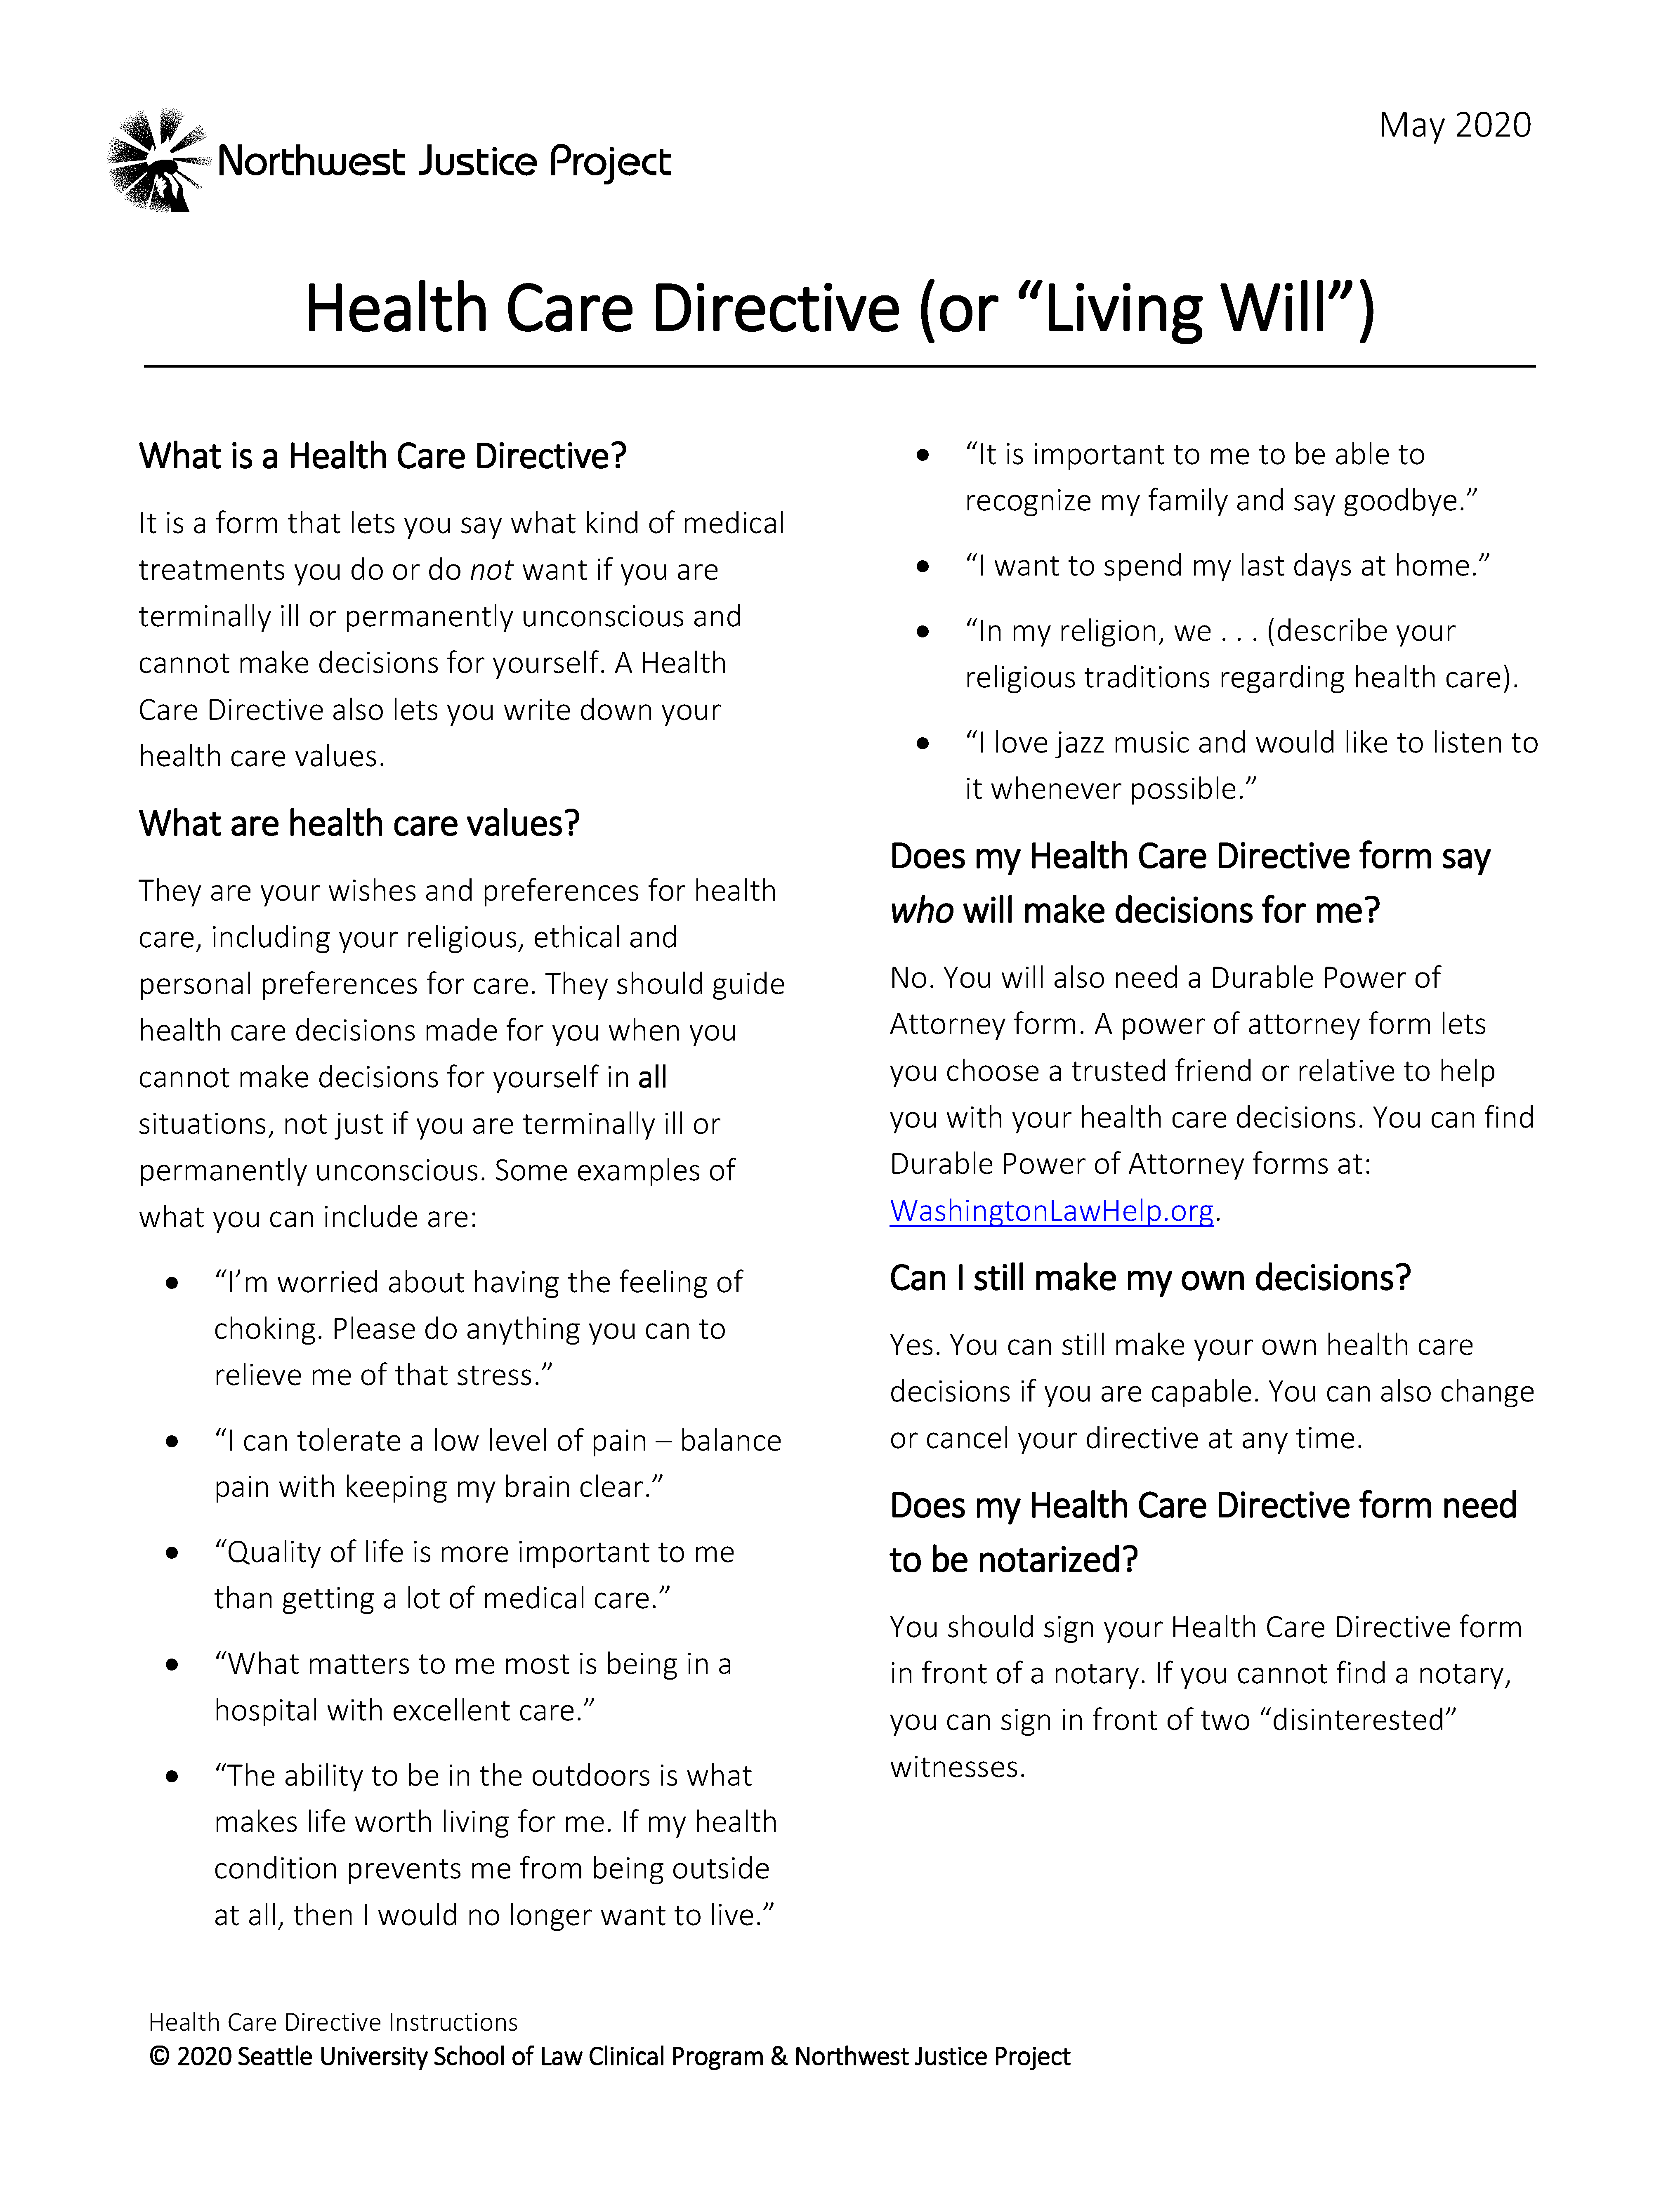 free-washington-advance-directive-form-medical-poa-living-will-pdf